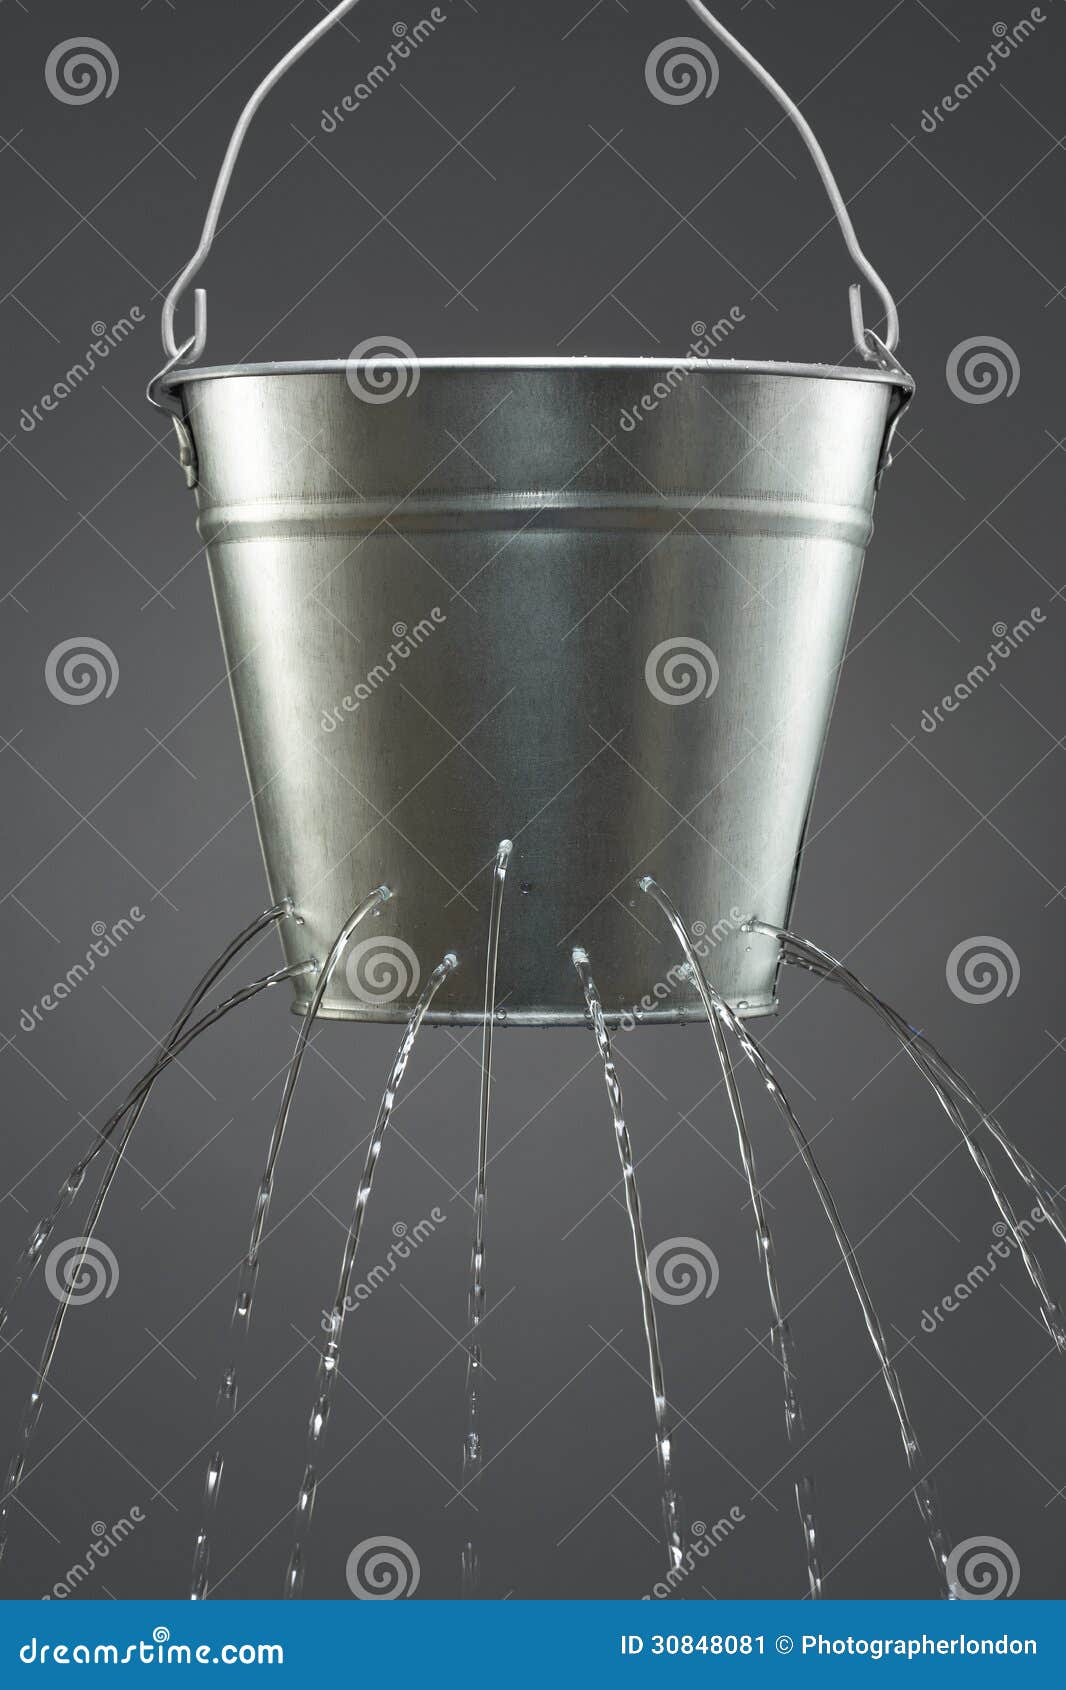 water leaking from bucket